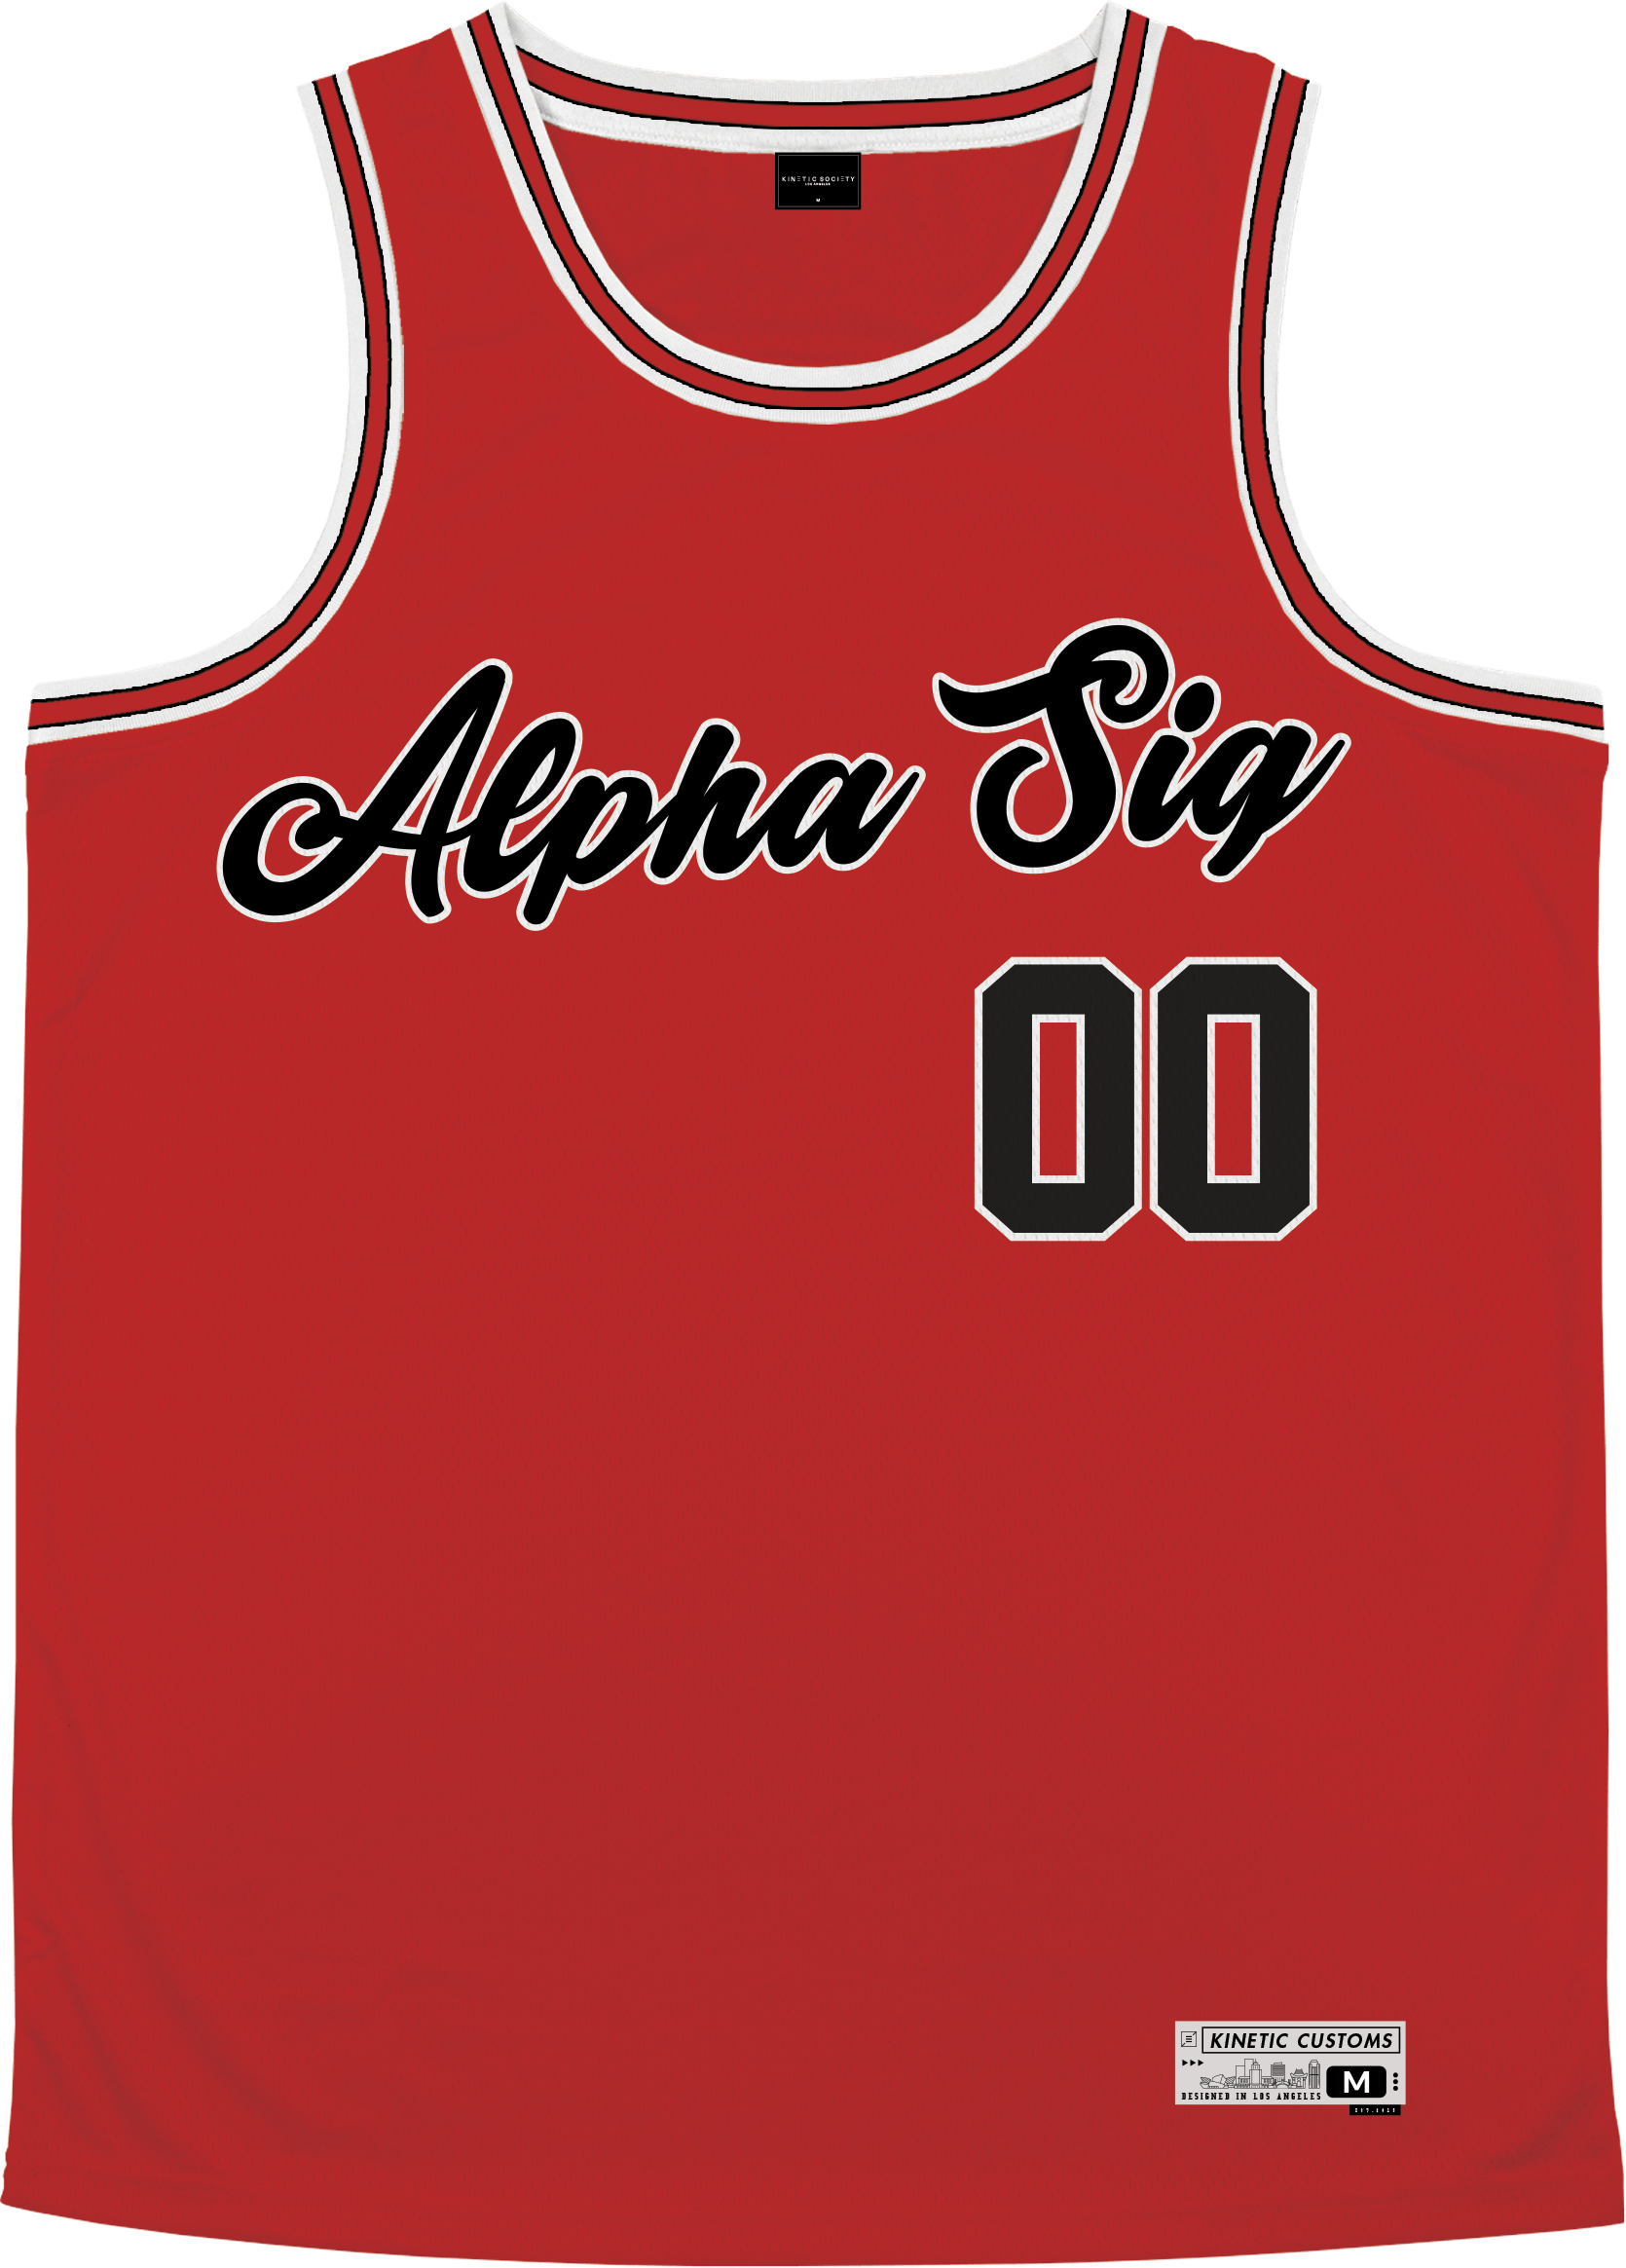 Alpha Sigma Phi - Big Red Basketball Jersey - Kinetic Society